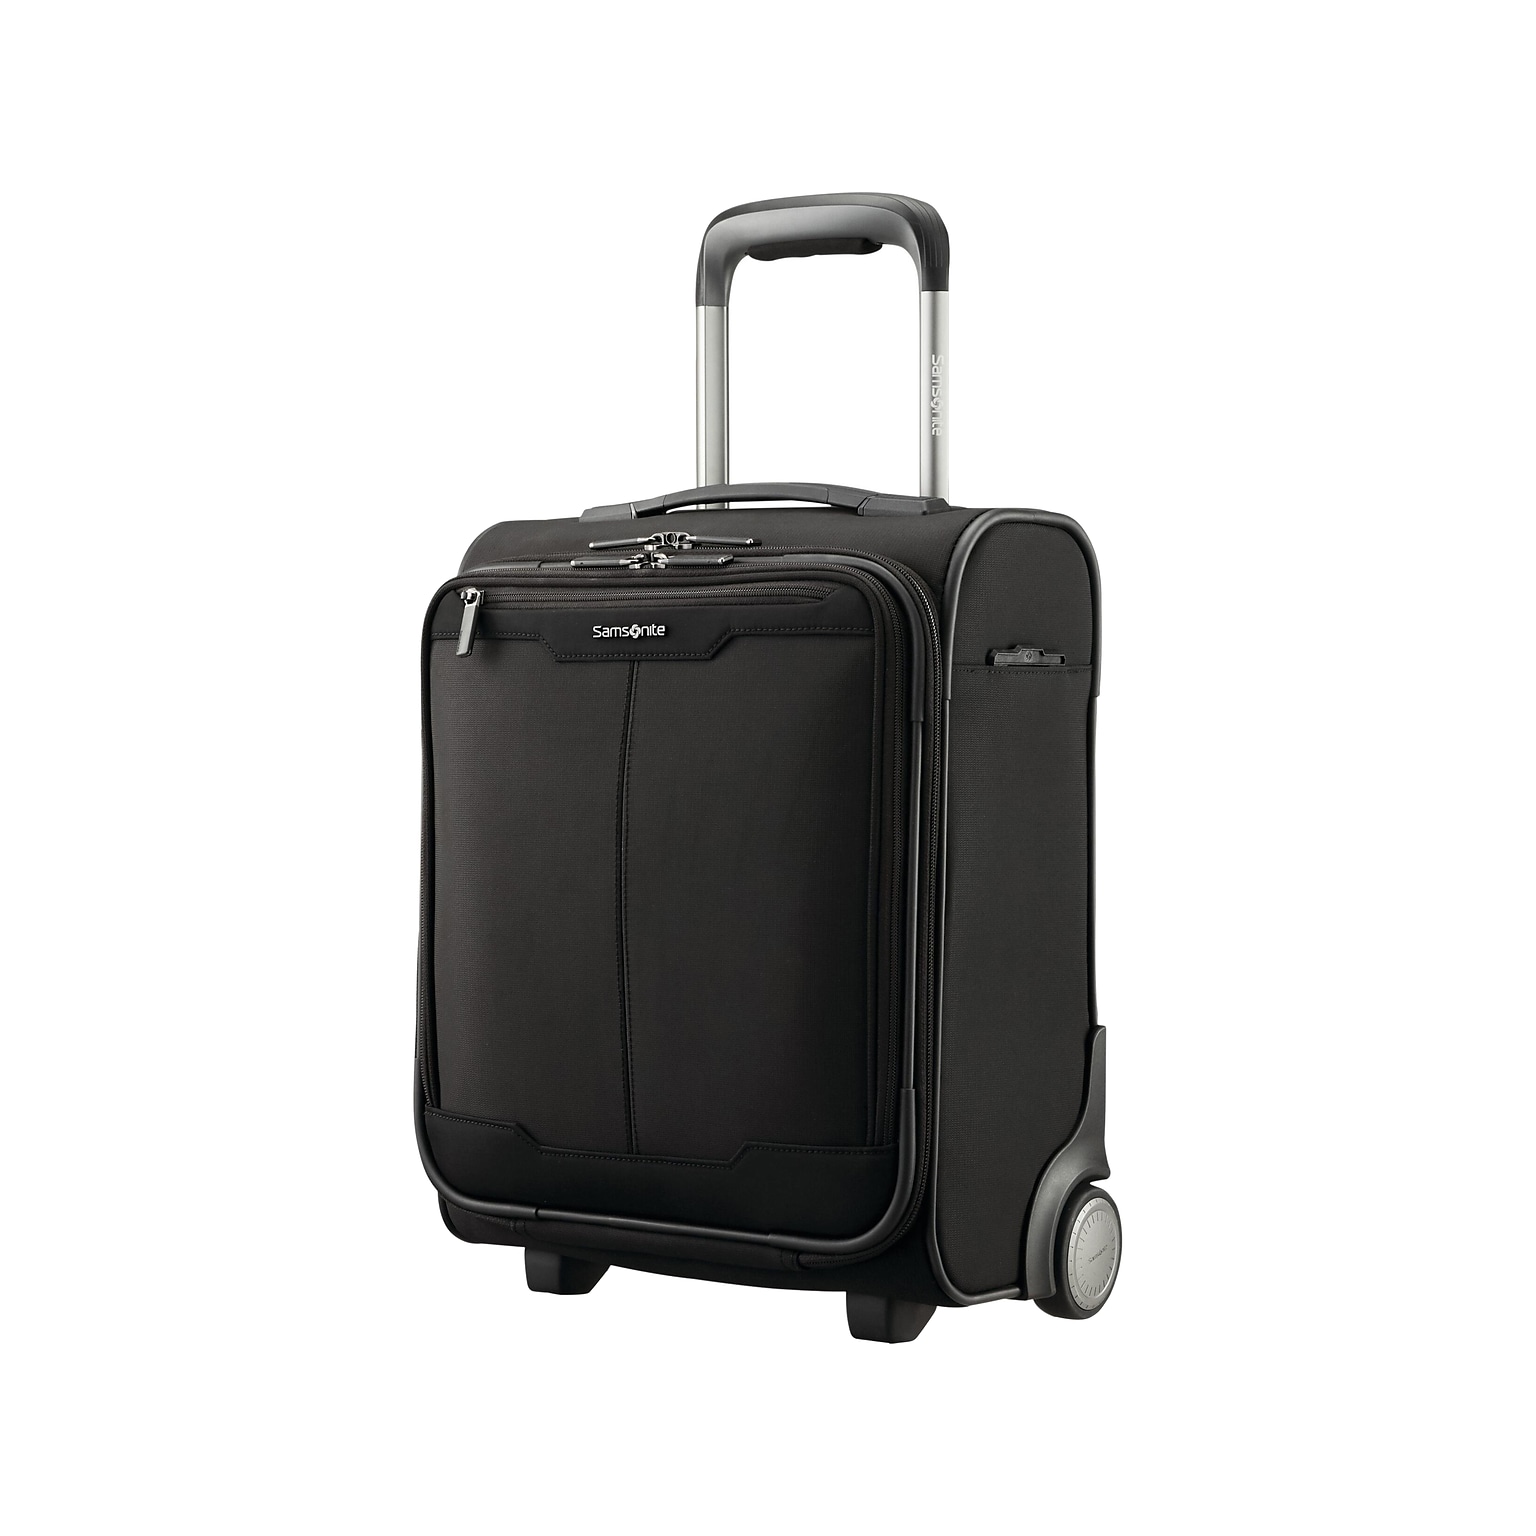 Samsonite Silhouette 17 18 Suitcase, 2-Wheeled, Black (139021-1041)